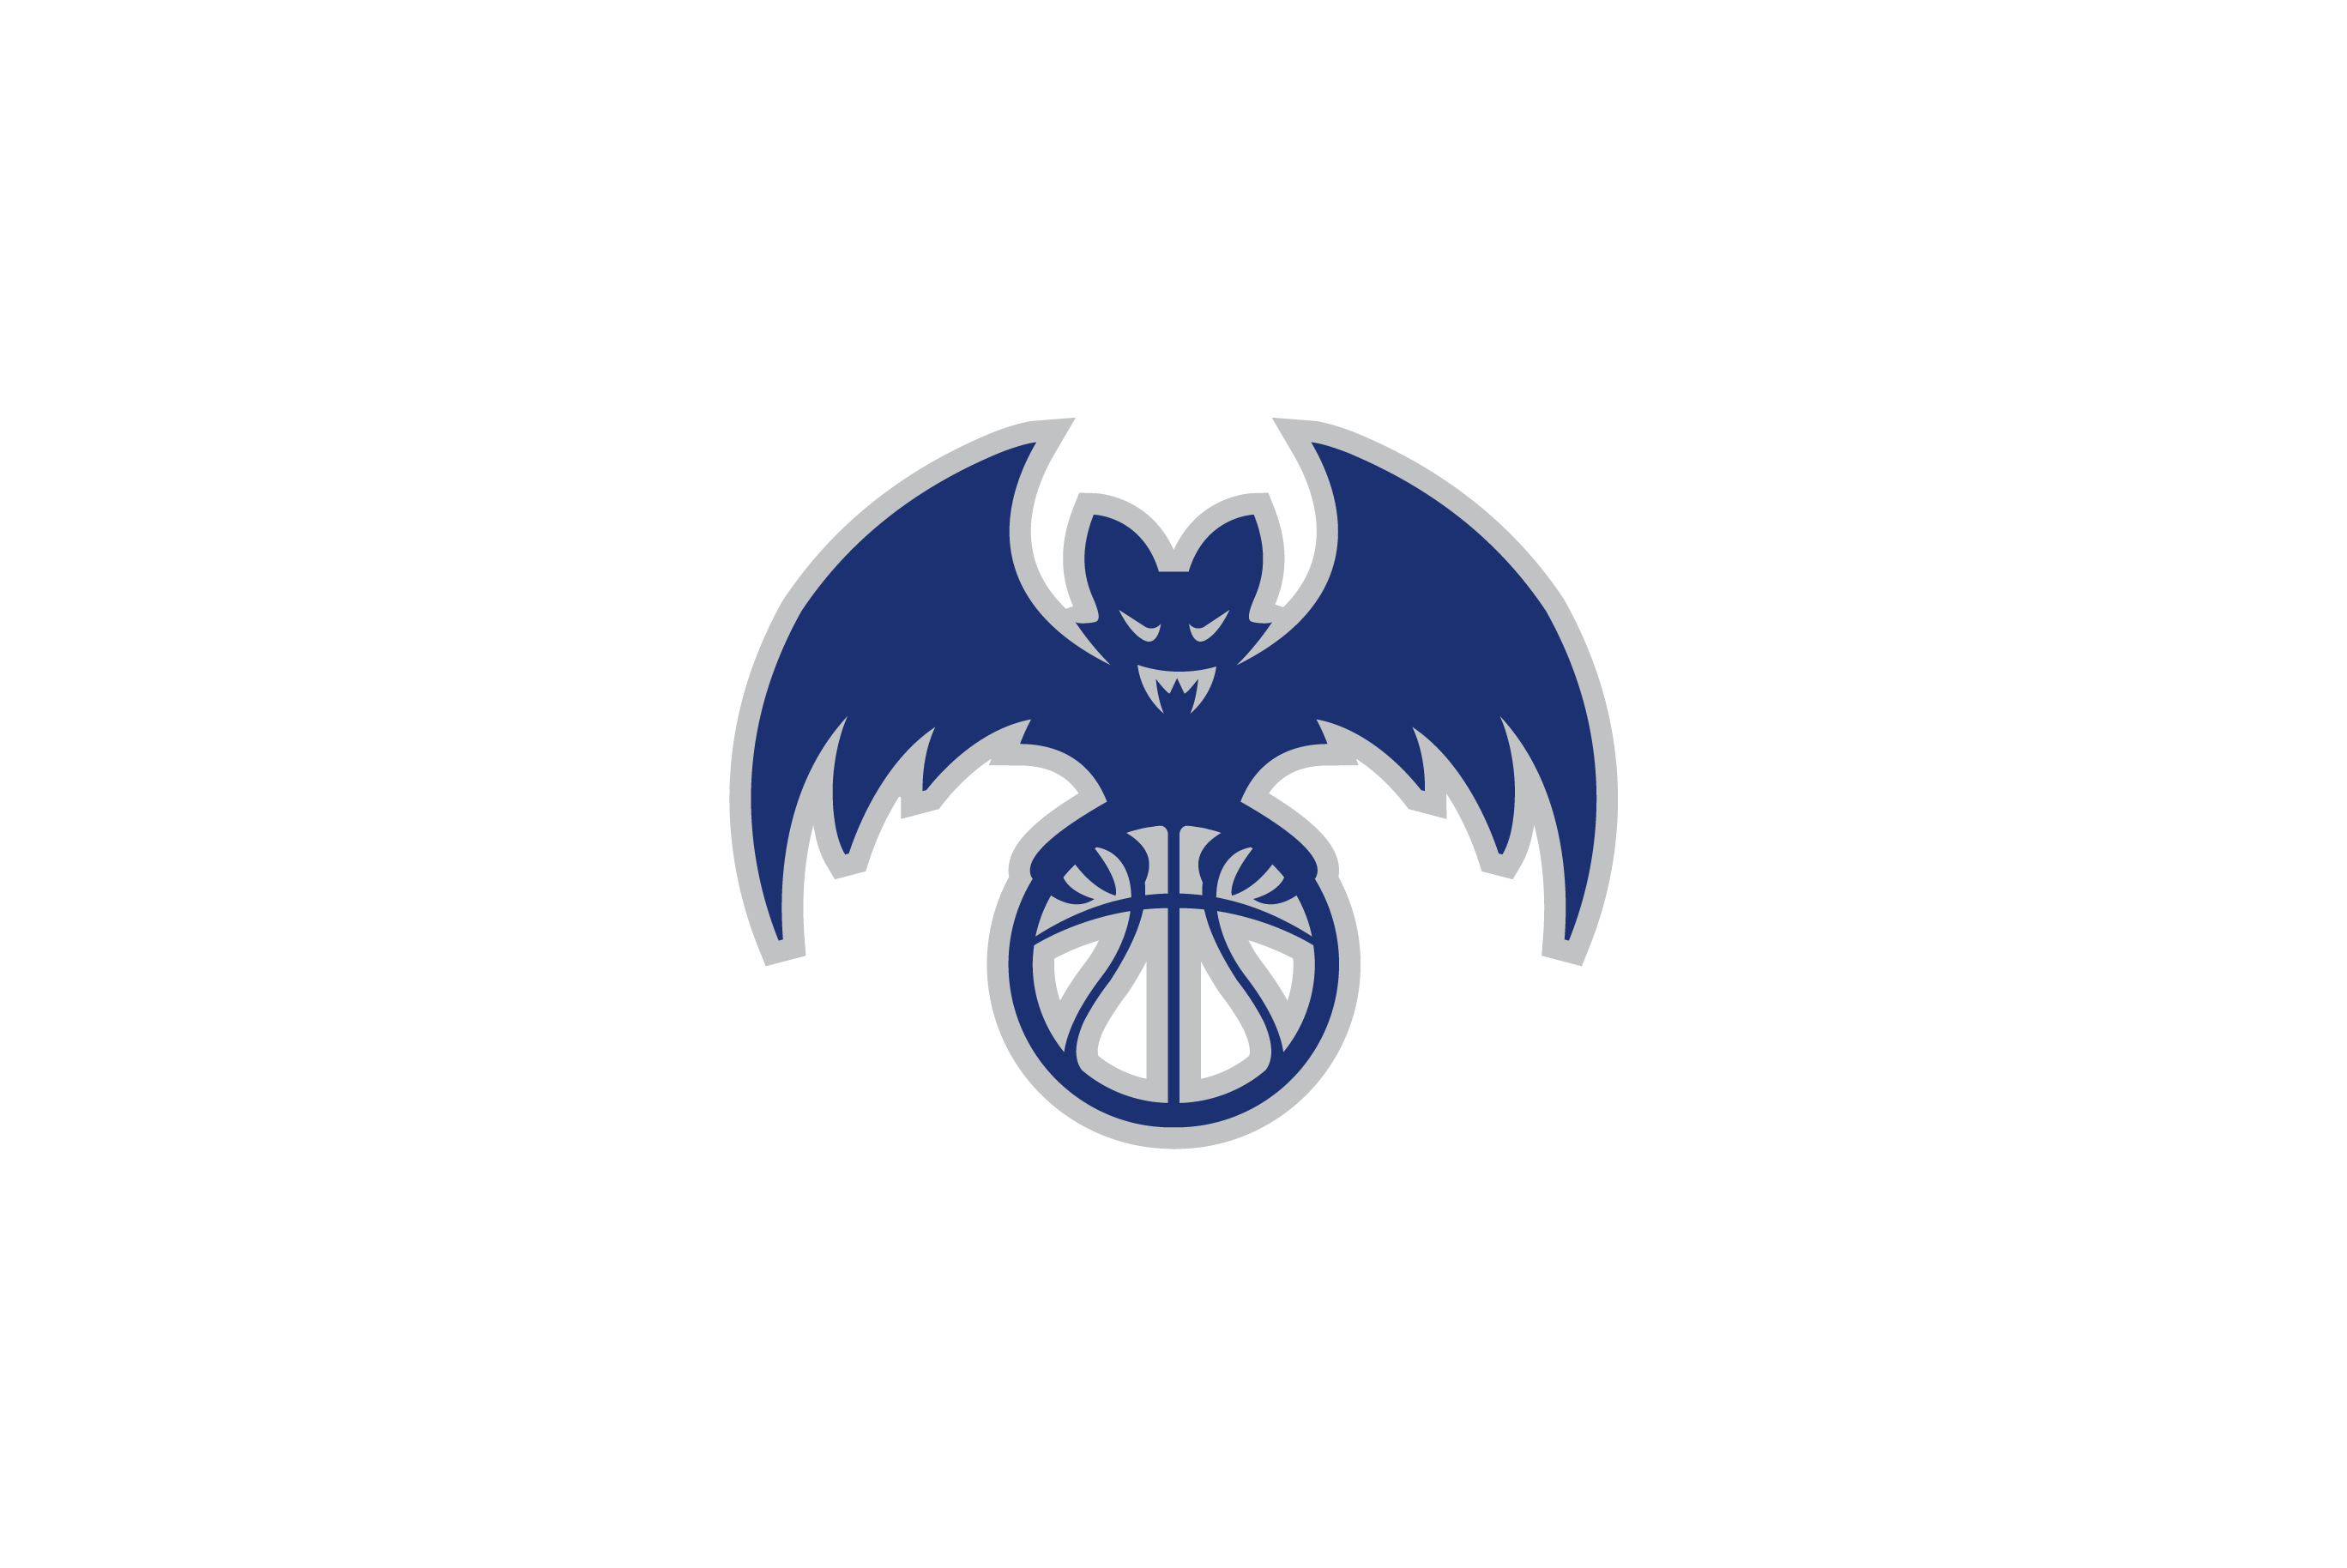 Cool Looking Logo - Bat Ball Logo Design | Logo Cowboy